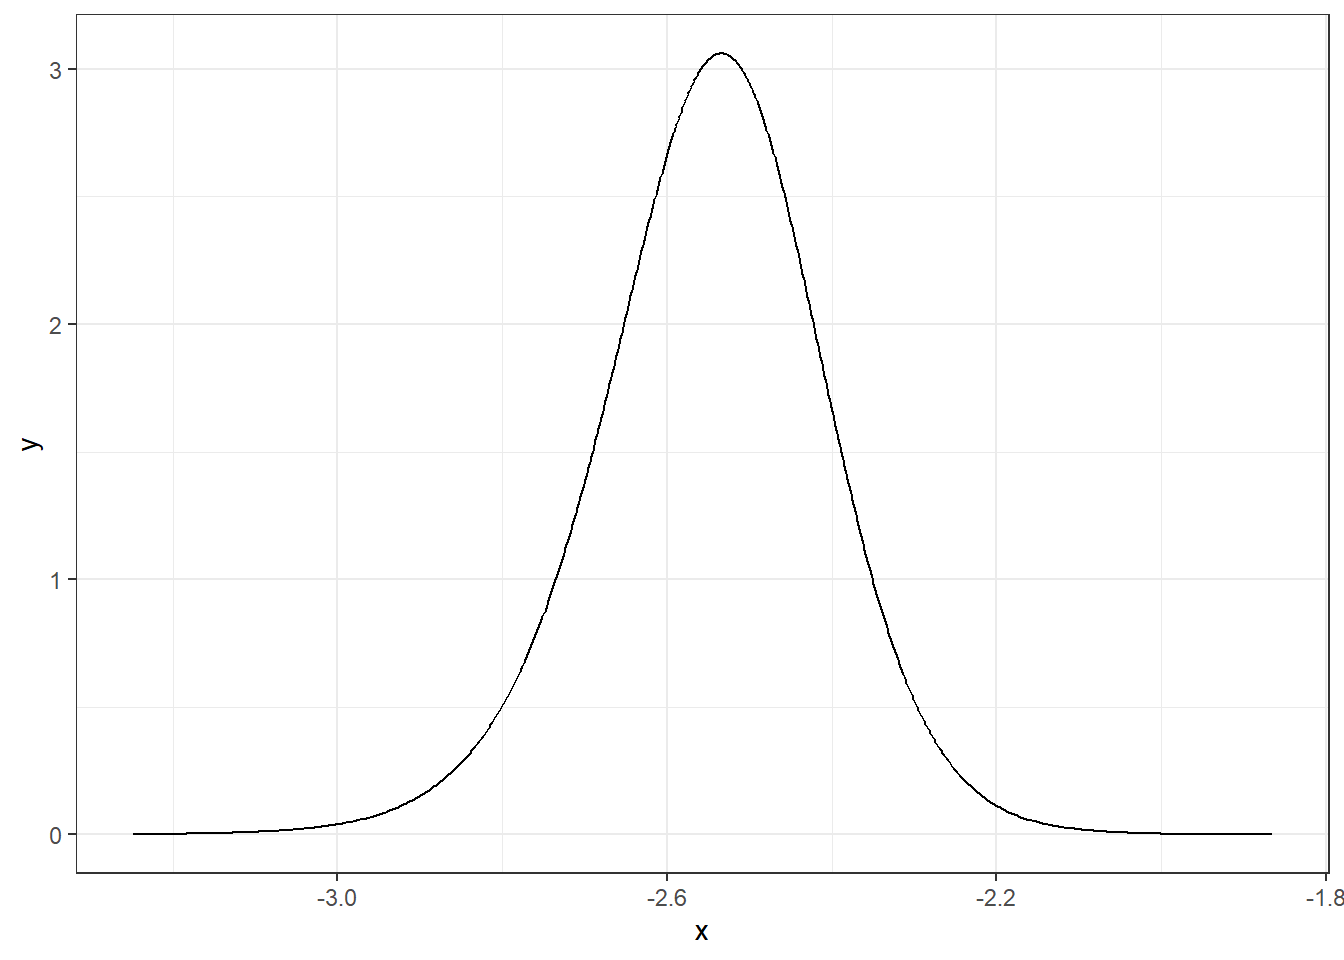 Posterior distribution of parameter $\alpha$.